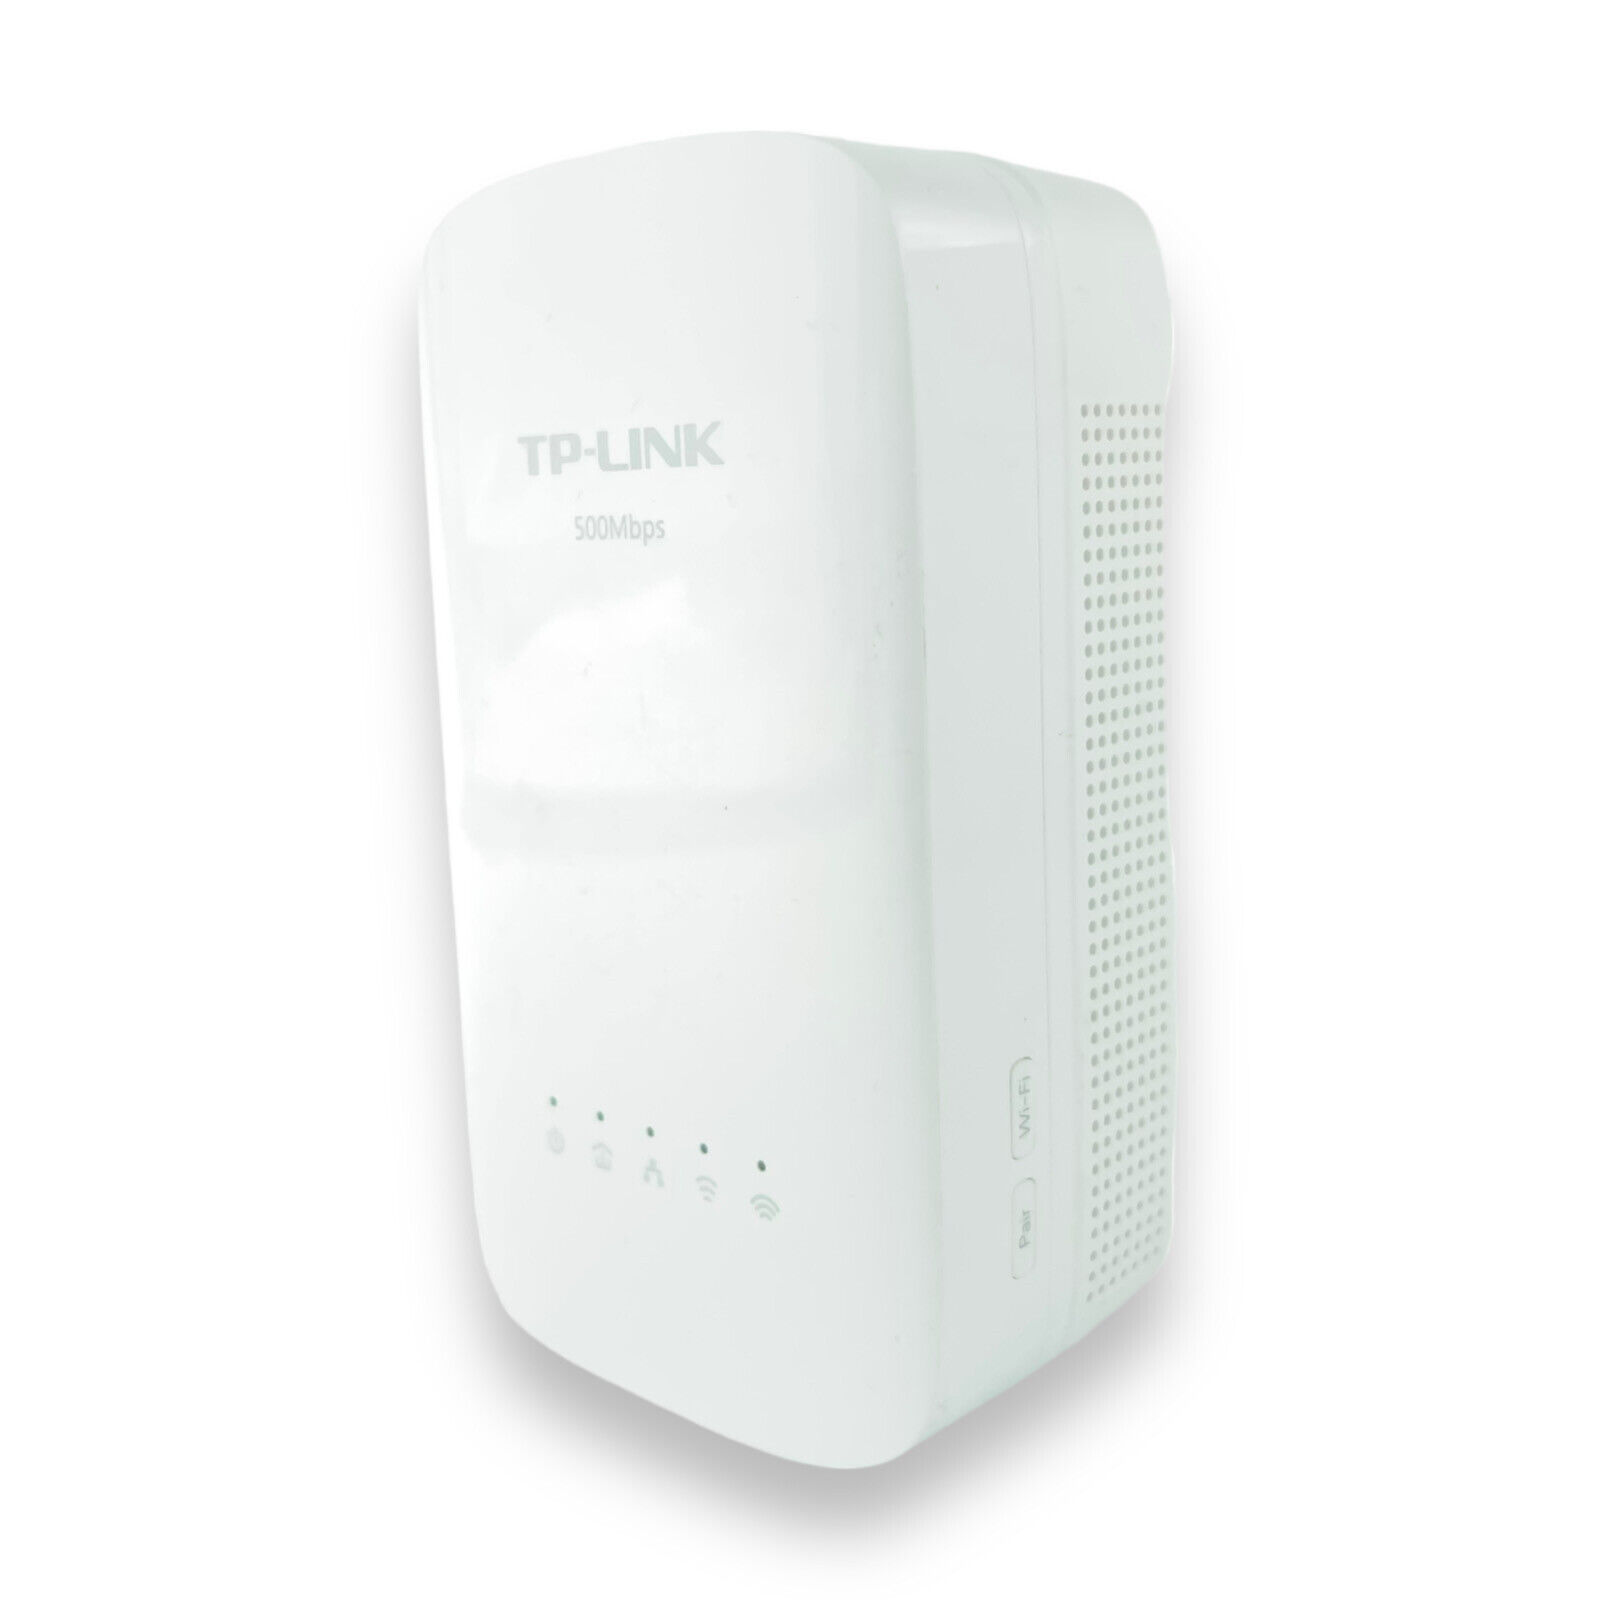 TP-LINK AC750 Wi-Fi Range Extender AV500 Powerline Edition Model TL-WPA4530